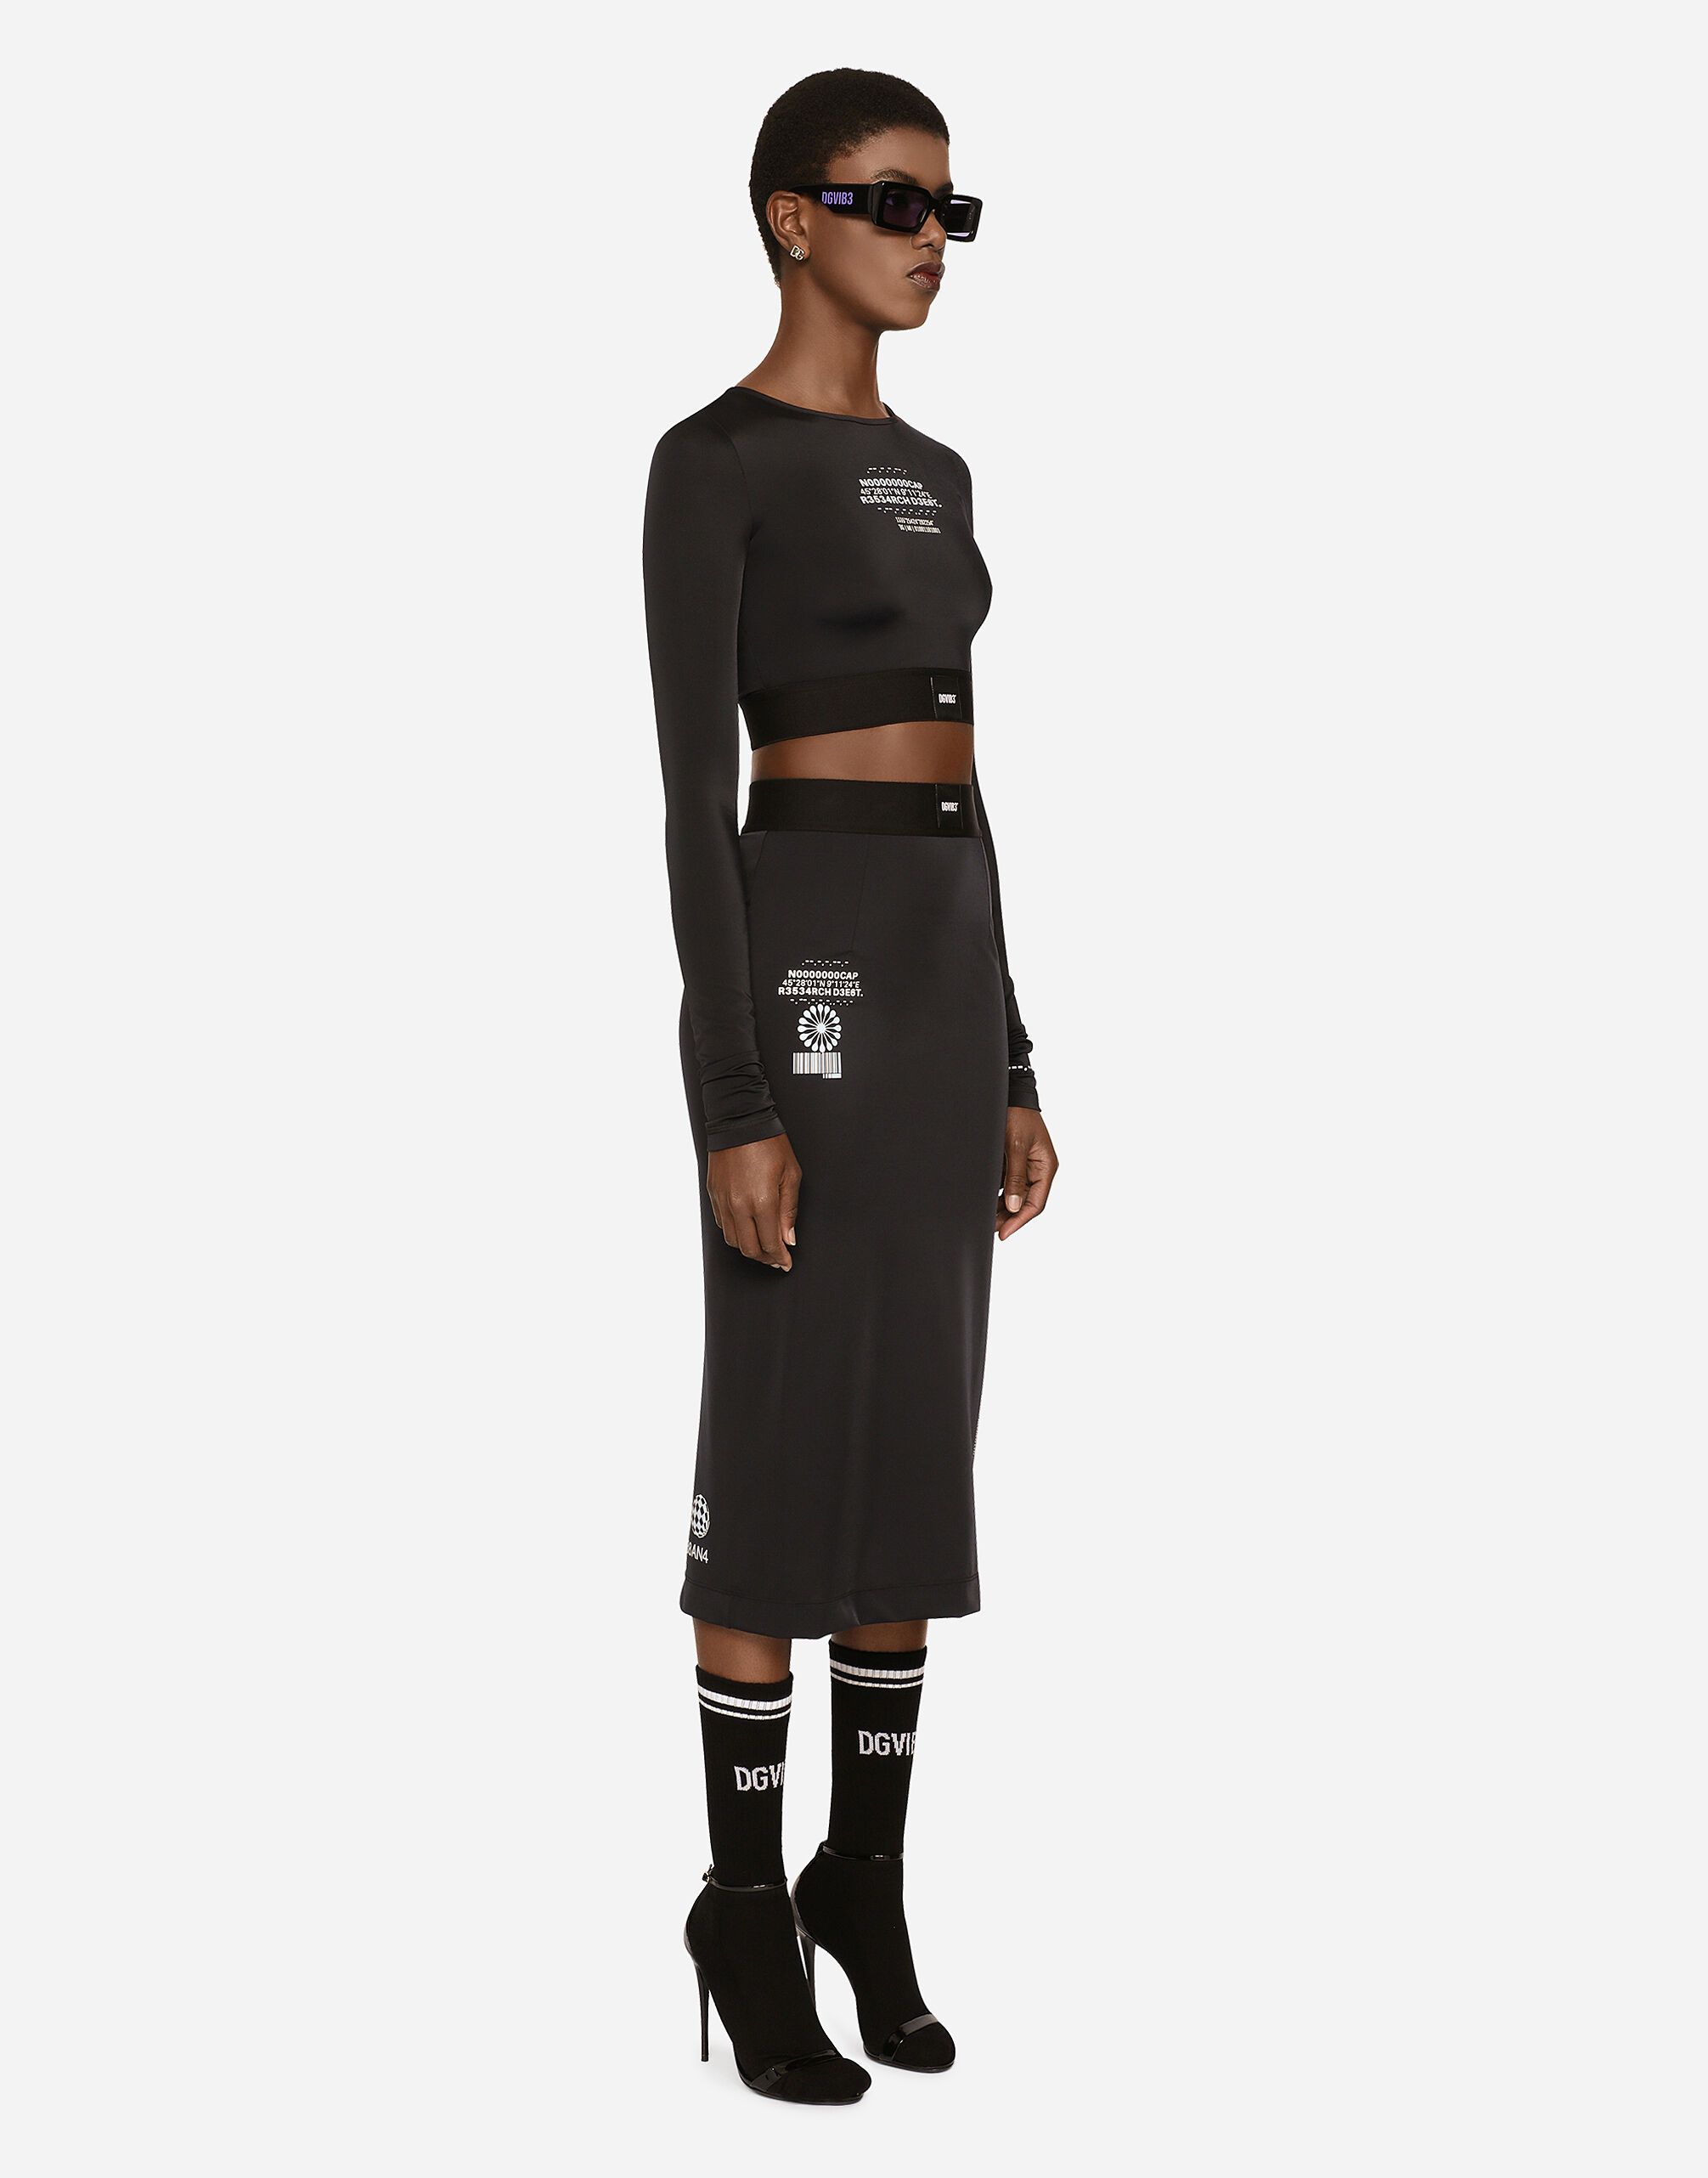 DGVIB3 spandex jersey pencil skirt in Black for | Dolce&Gabbana® US